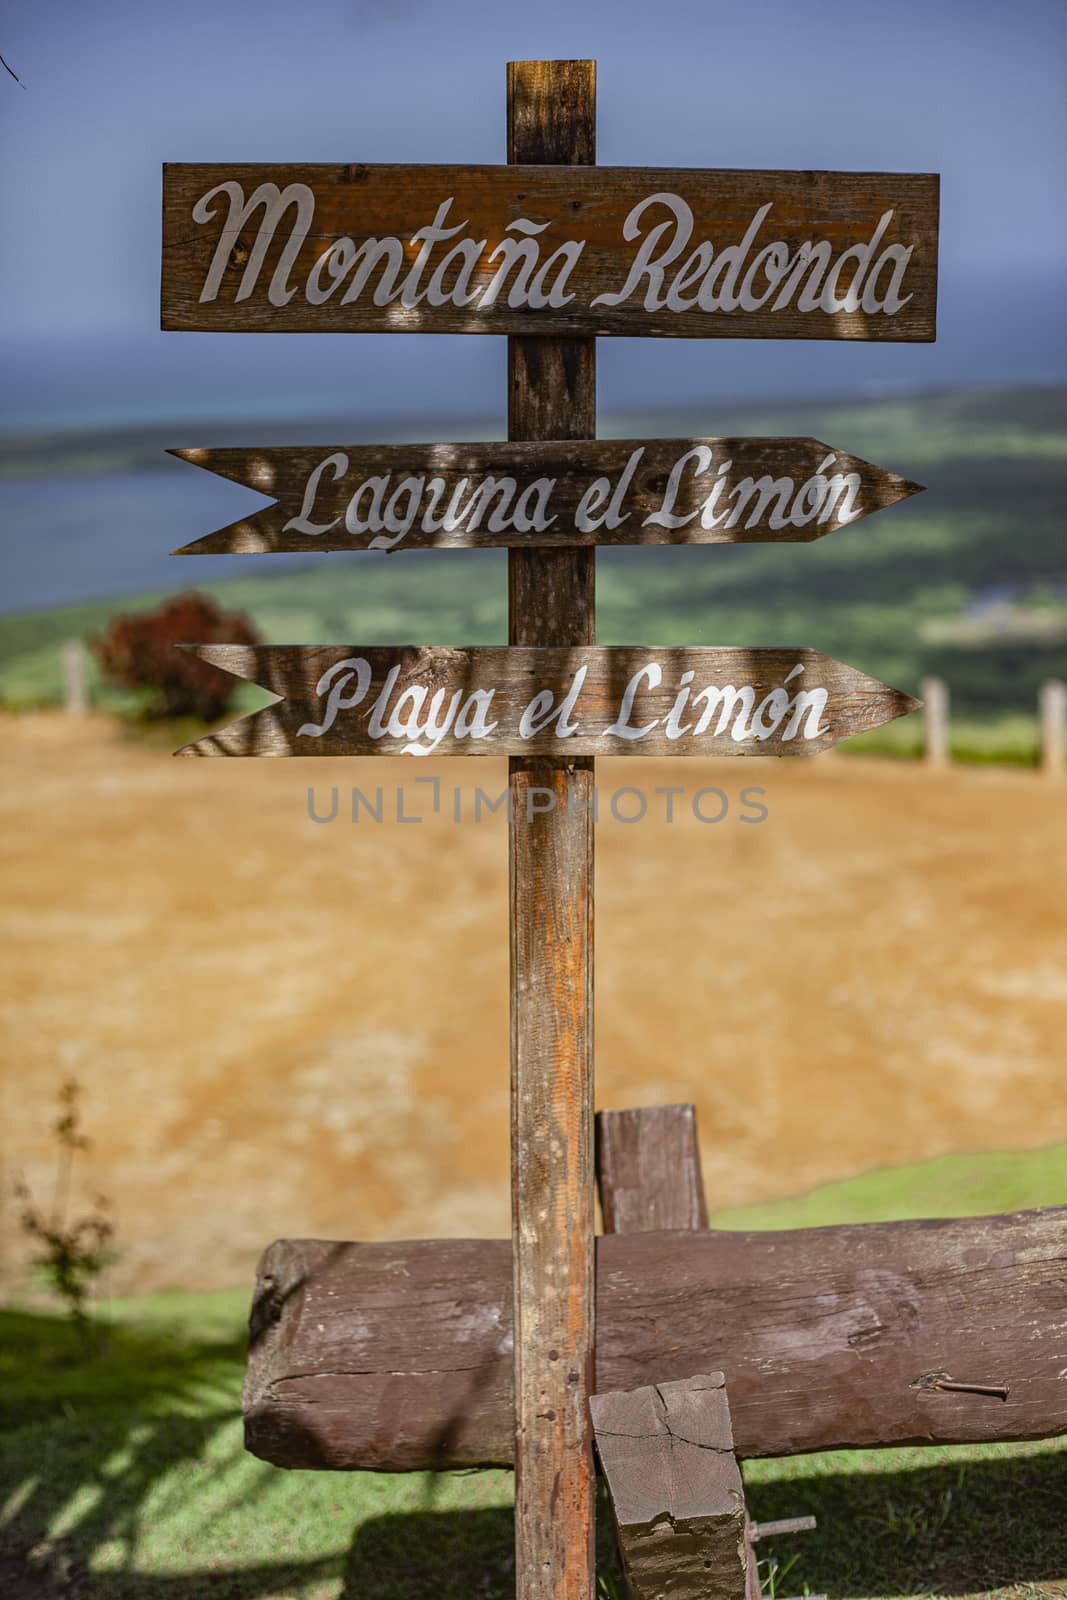 Indication for Montana Redonda, Laguna Limon and Playa Limon in Dominican Republic